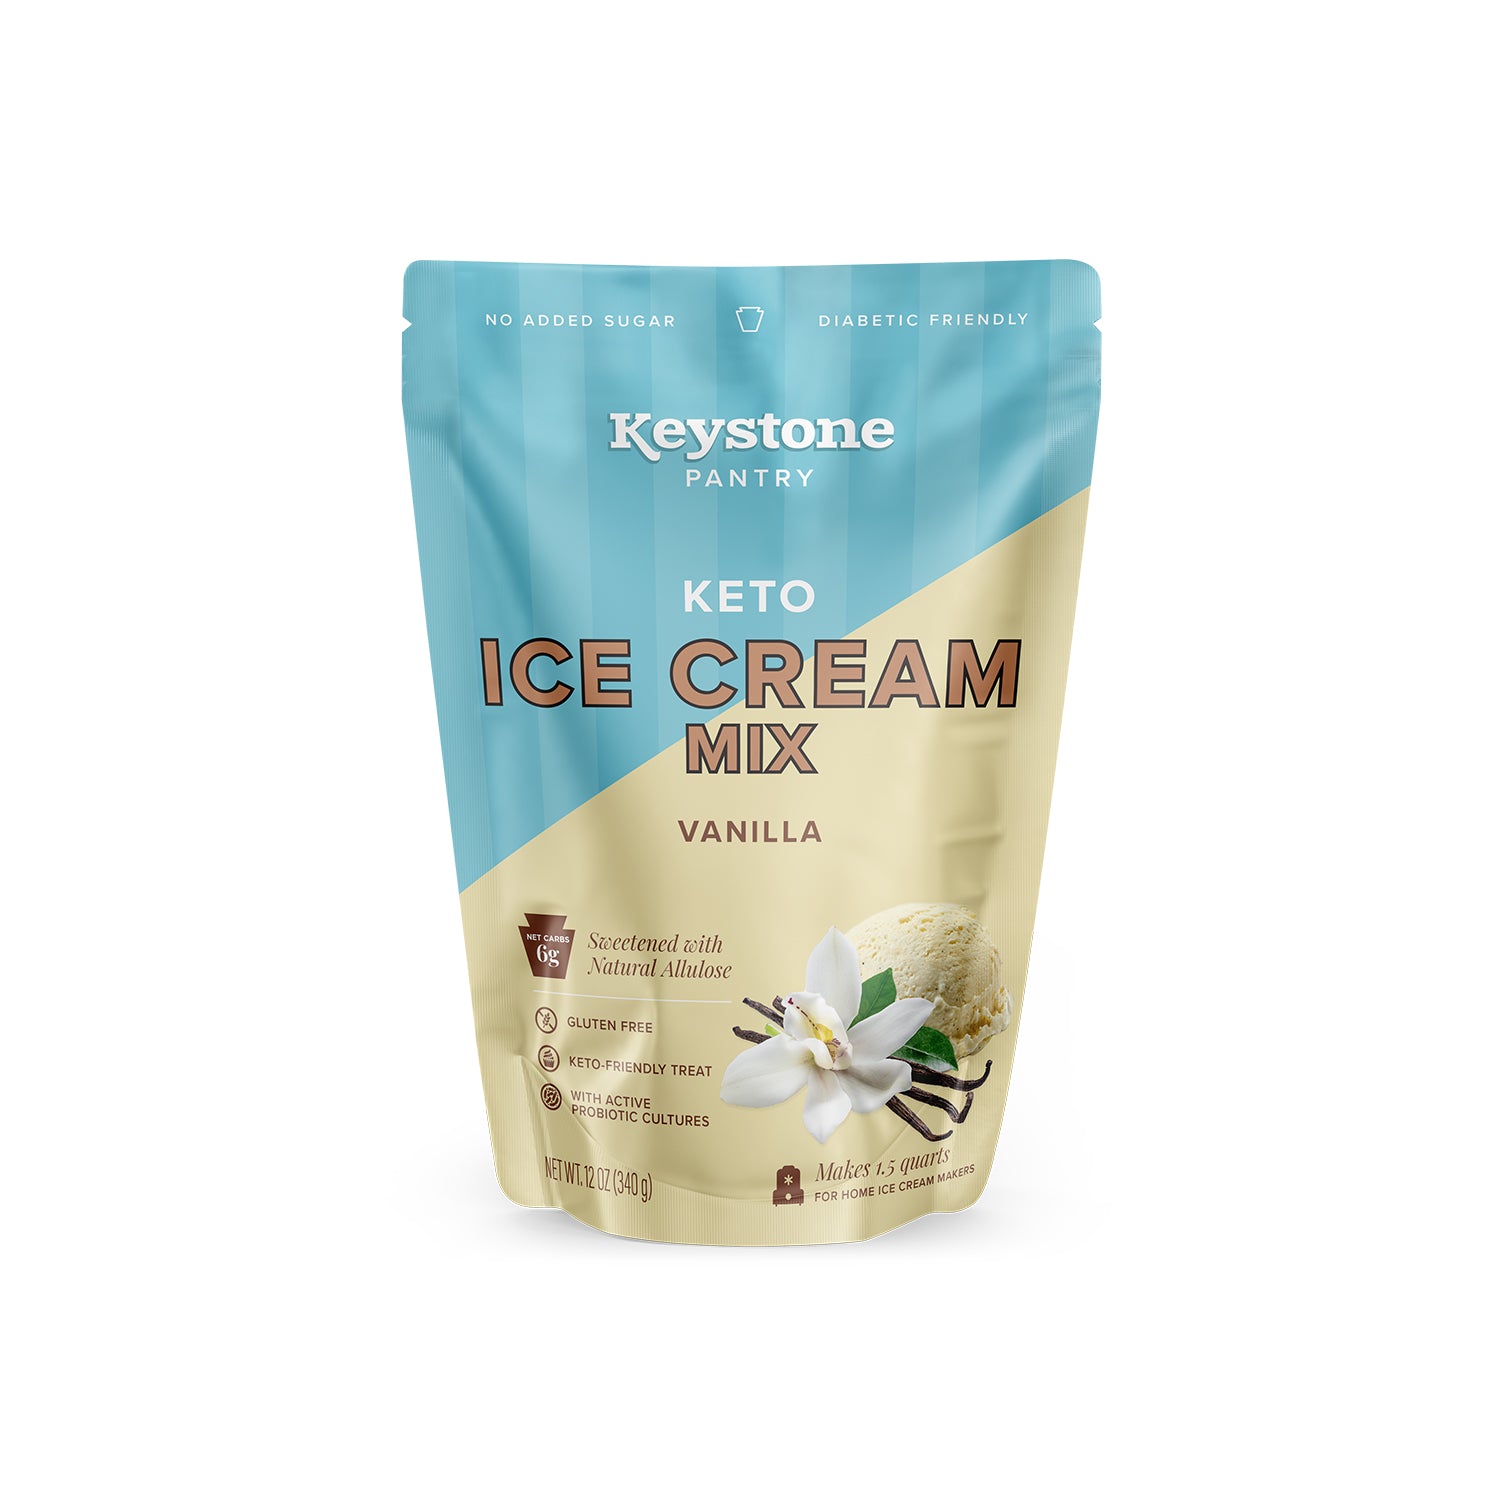 Keystone Pantry Keto Ice Cream Mix Vanilla with Probiotics Cultures